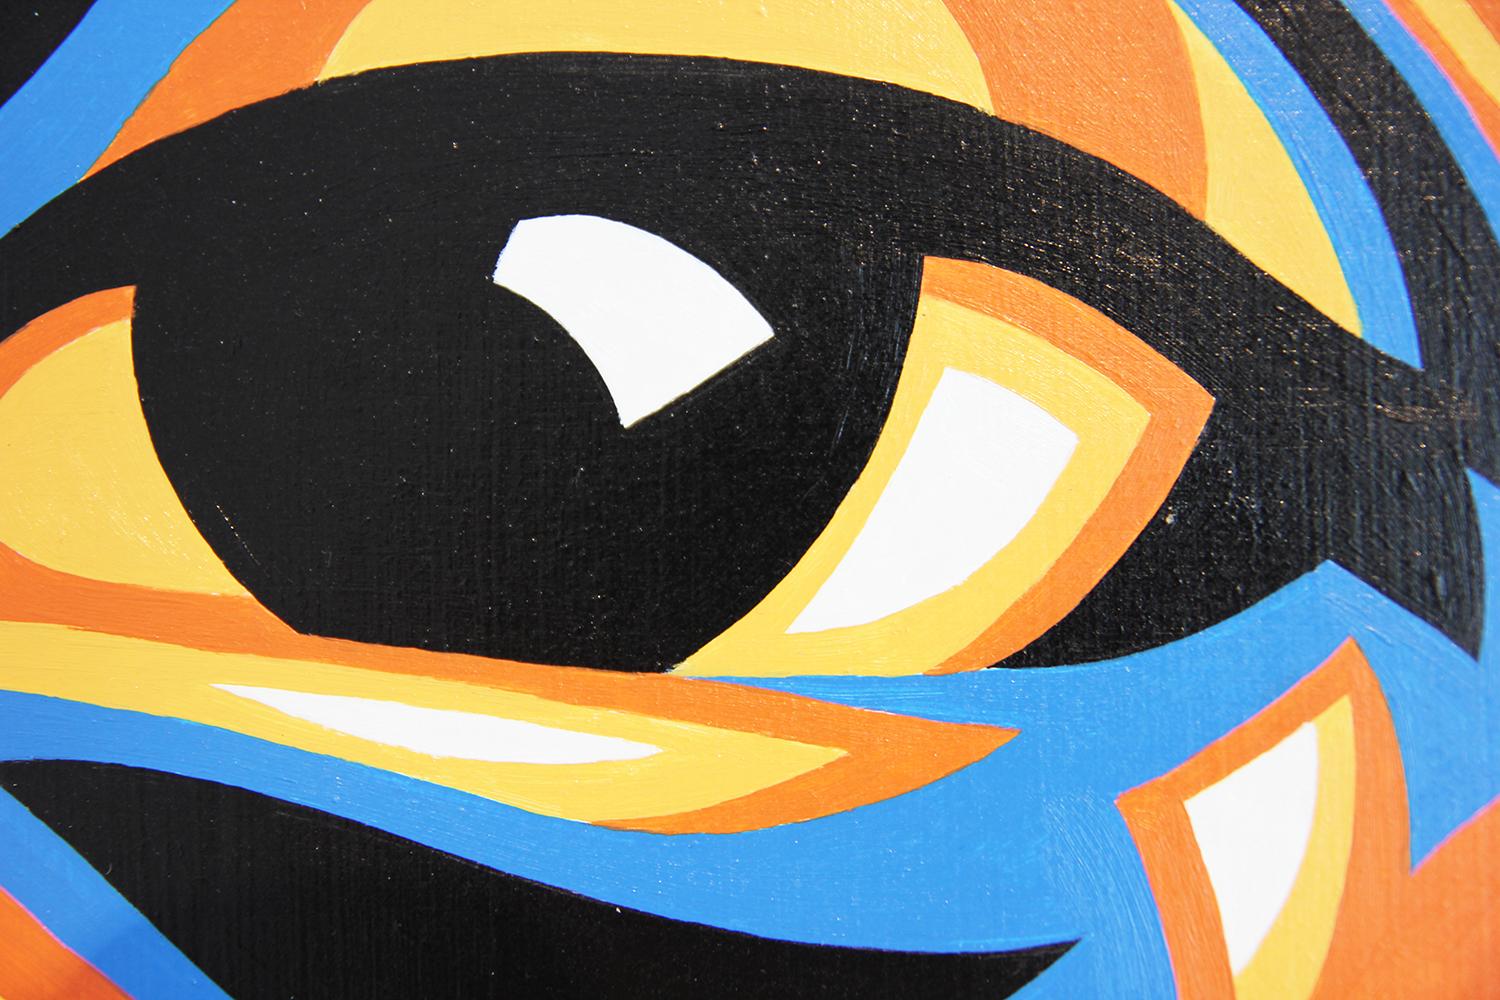 Chadwick Boseman “Black Panther” Teal, Blue, Orange, and Yellow Modern Portrait 2